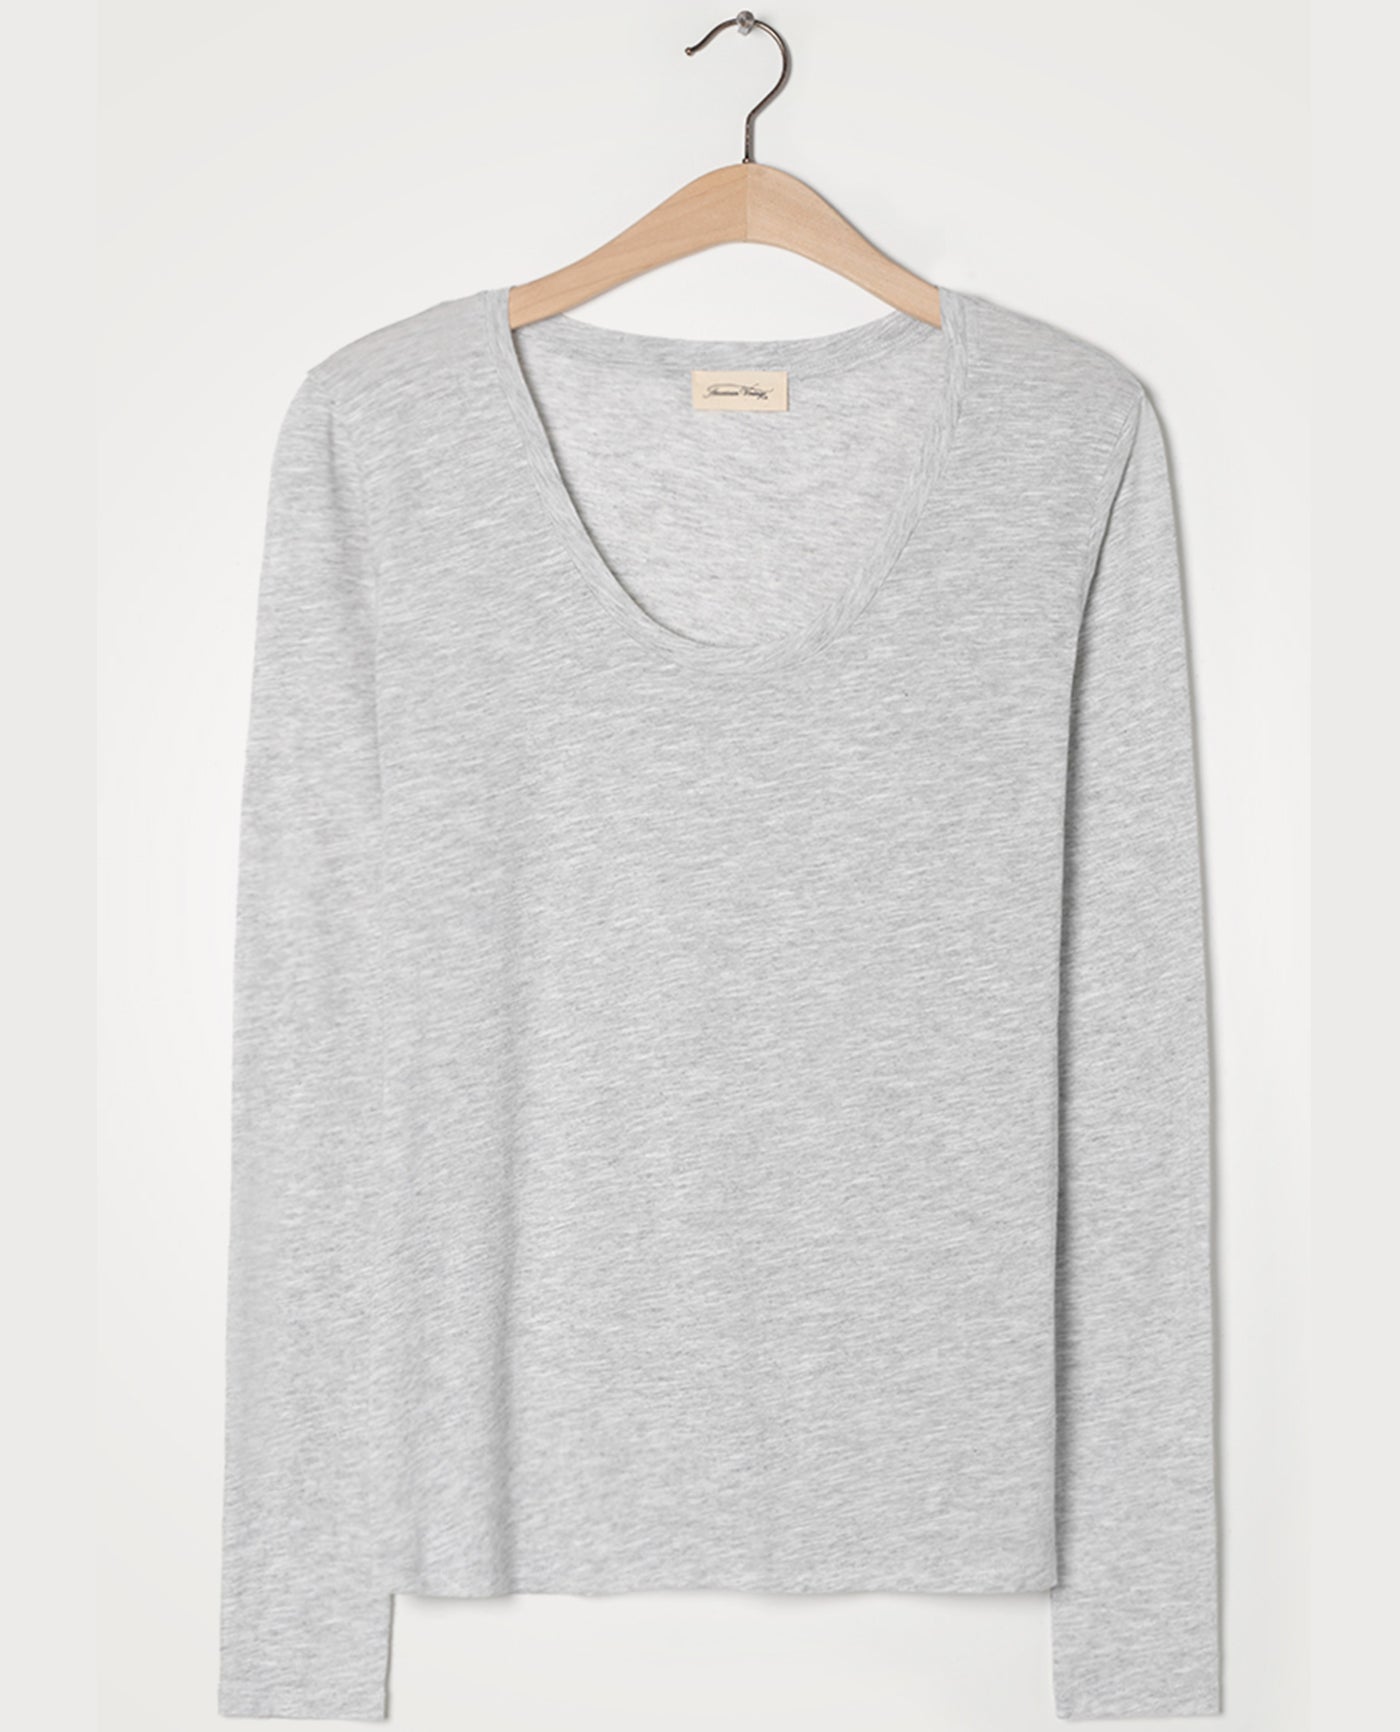 American Vintage Jacksonville Long Sleeve Grey T-Shirt